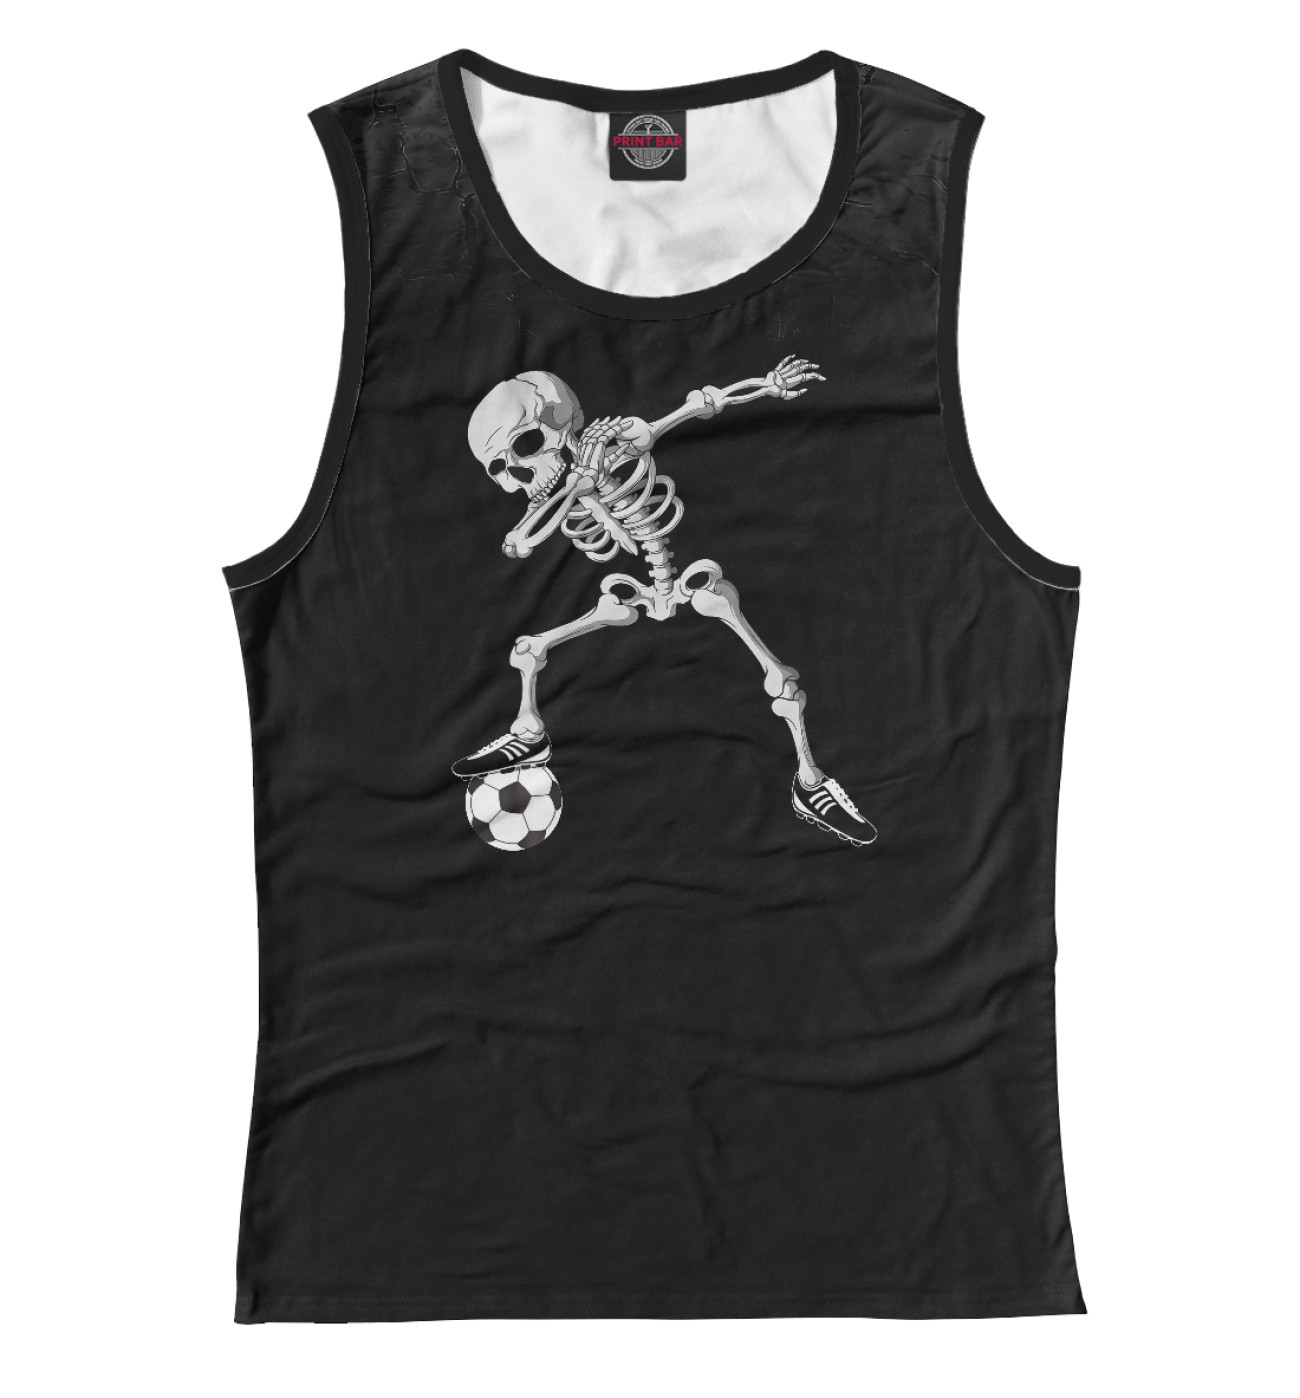 Женская Майка Dabbing Skeleton Soccer, артикул: FTO-979165-may-1